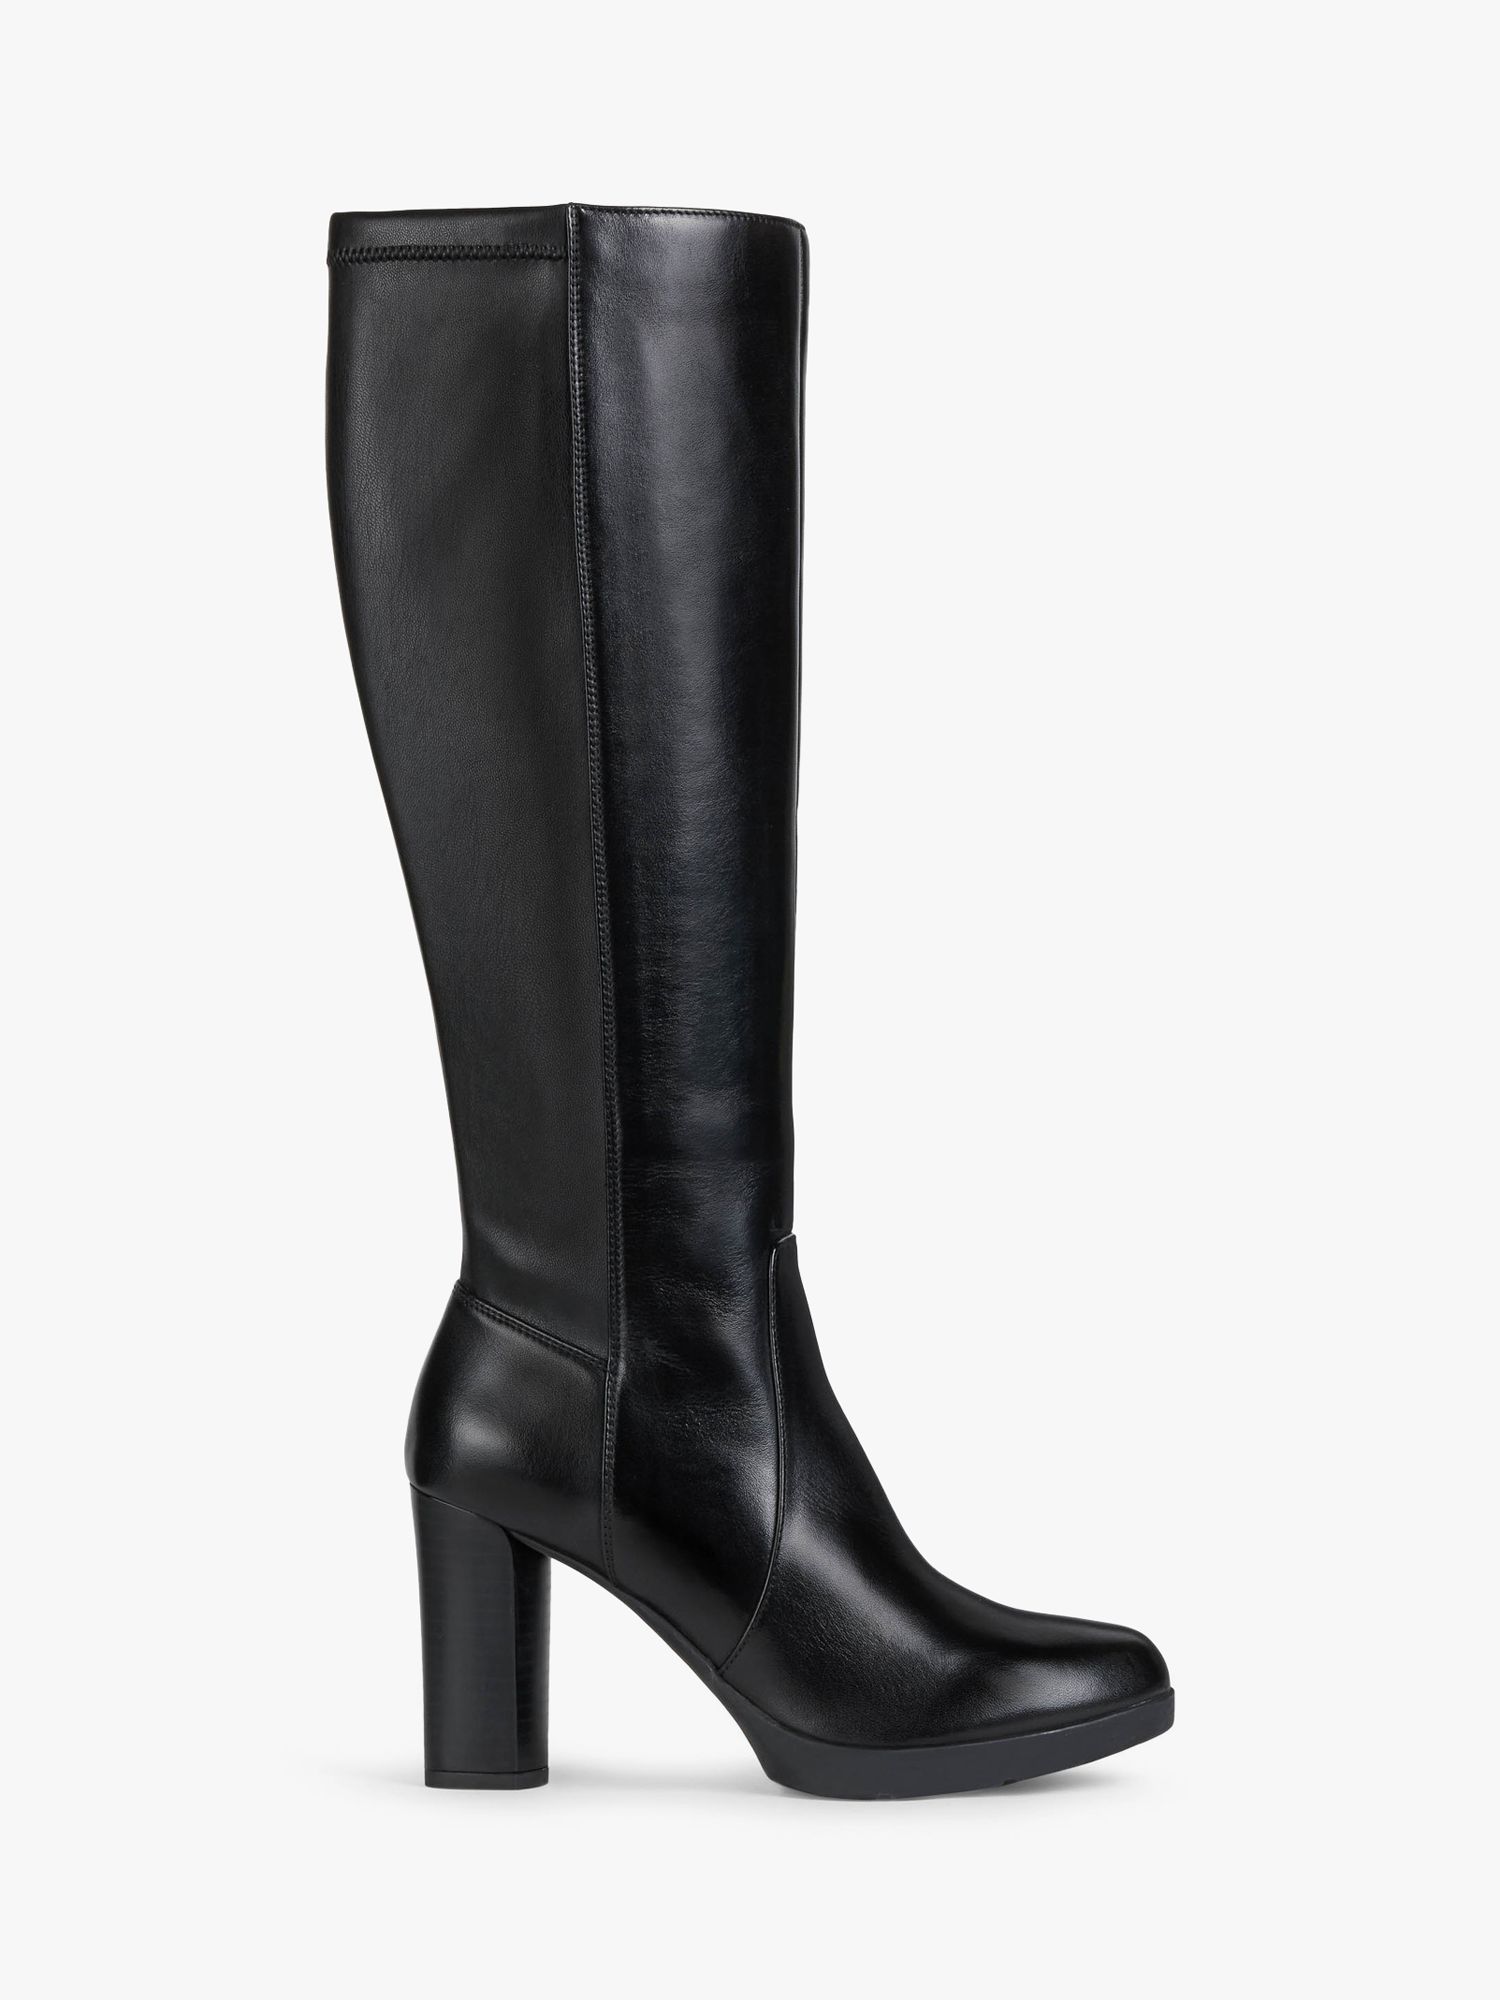 Geox Women's Anylla Block Heeled Leather Knee High Boots, Black